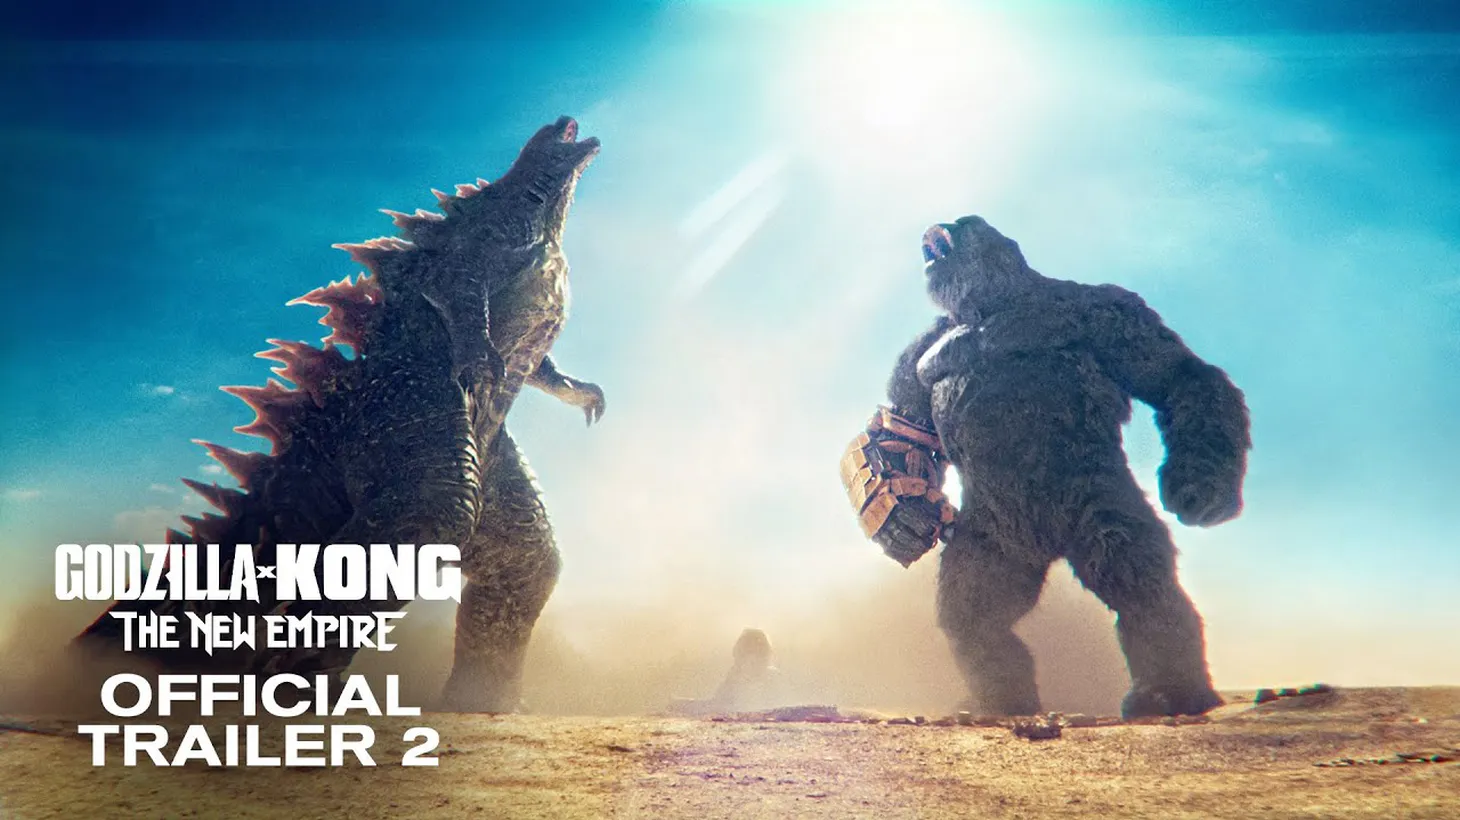 Adam Wingard is the director of “Godzilla x Kong: The New Empire.”